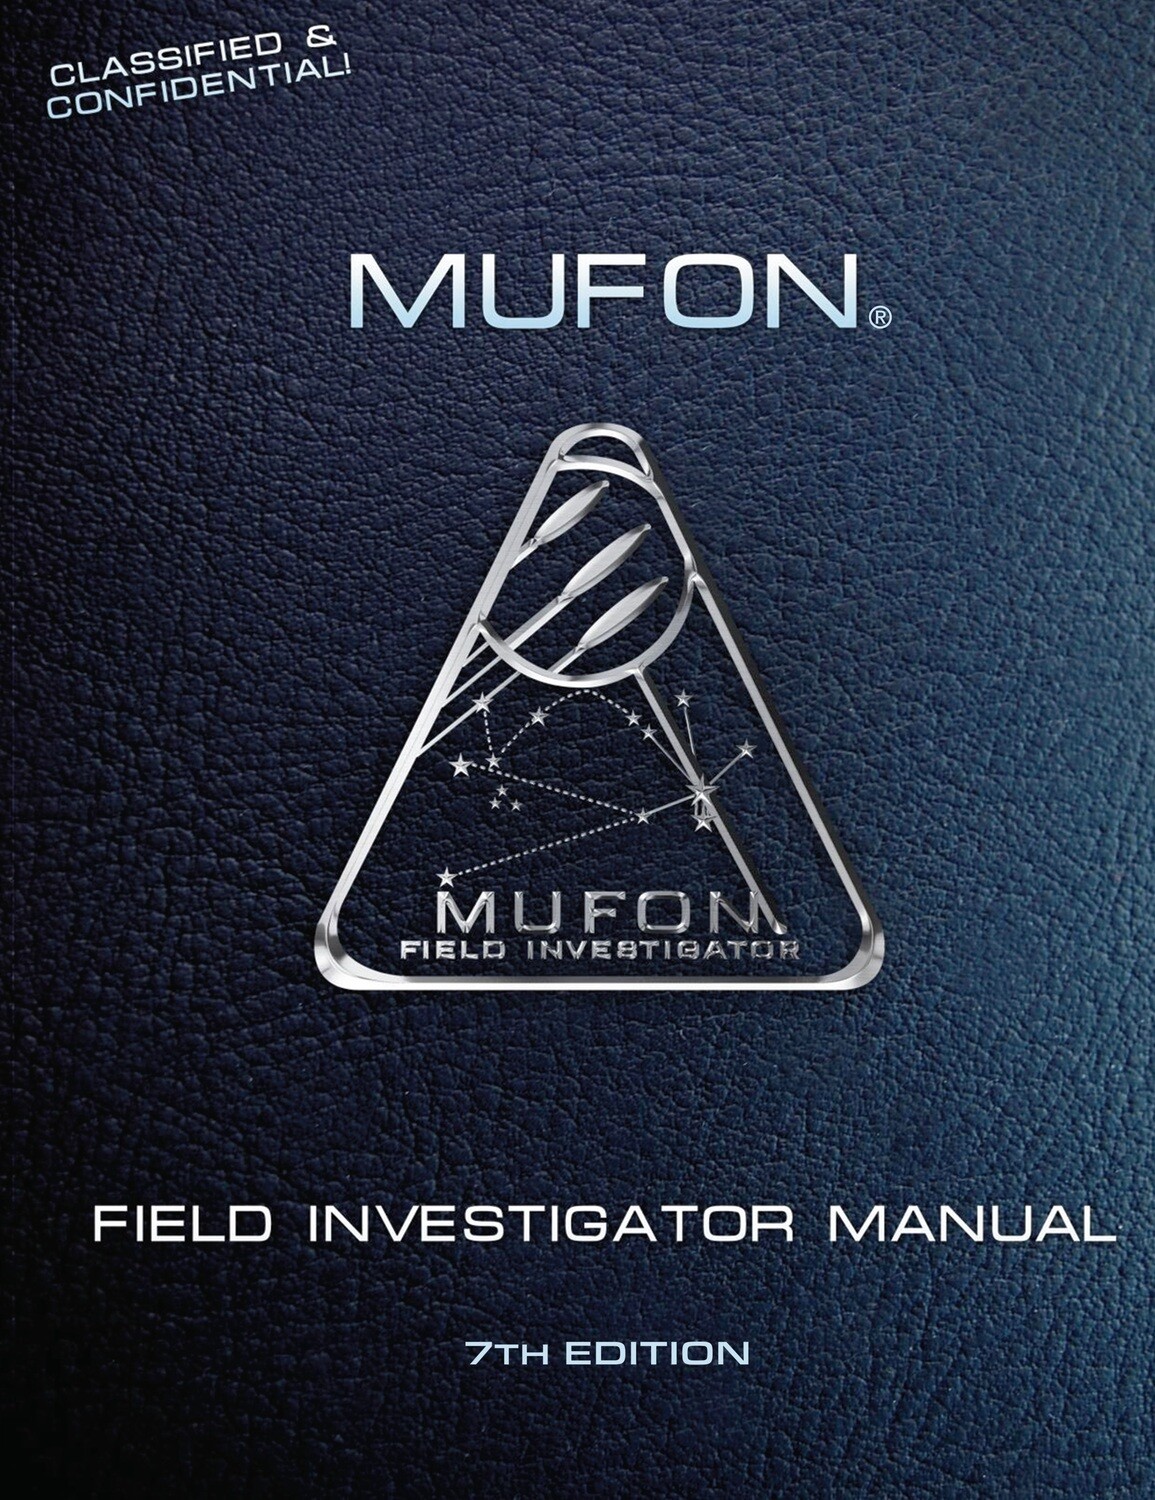 Field Investigator Training Manual